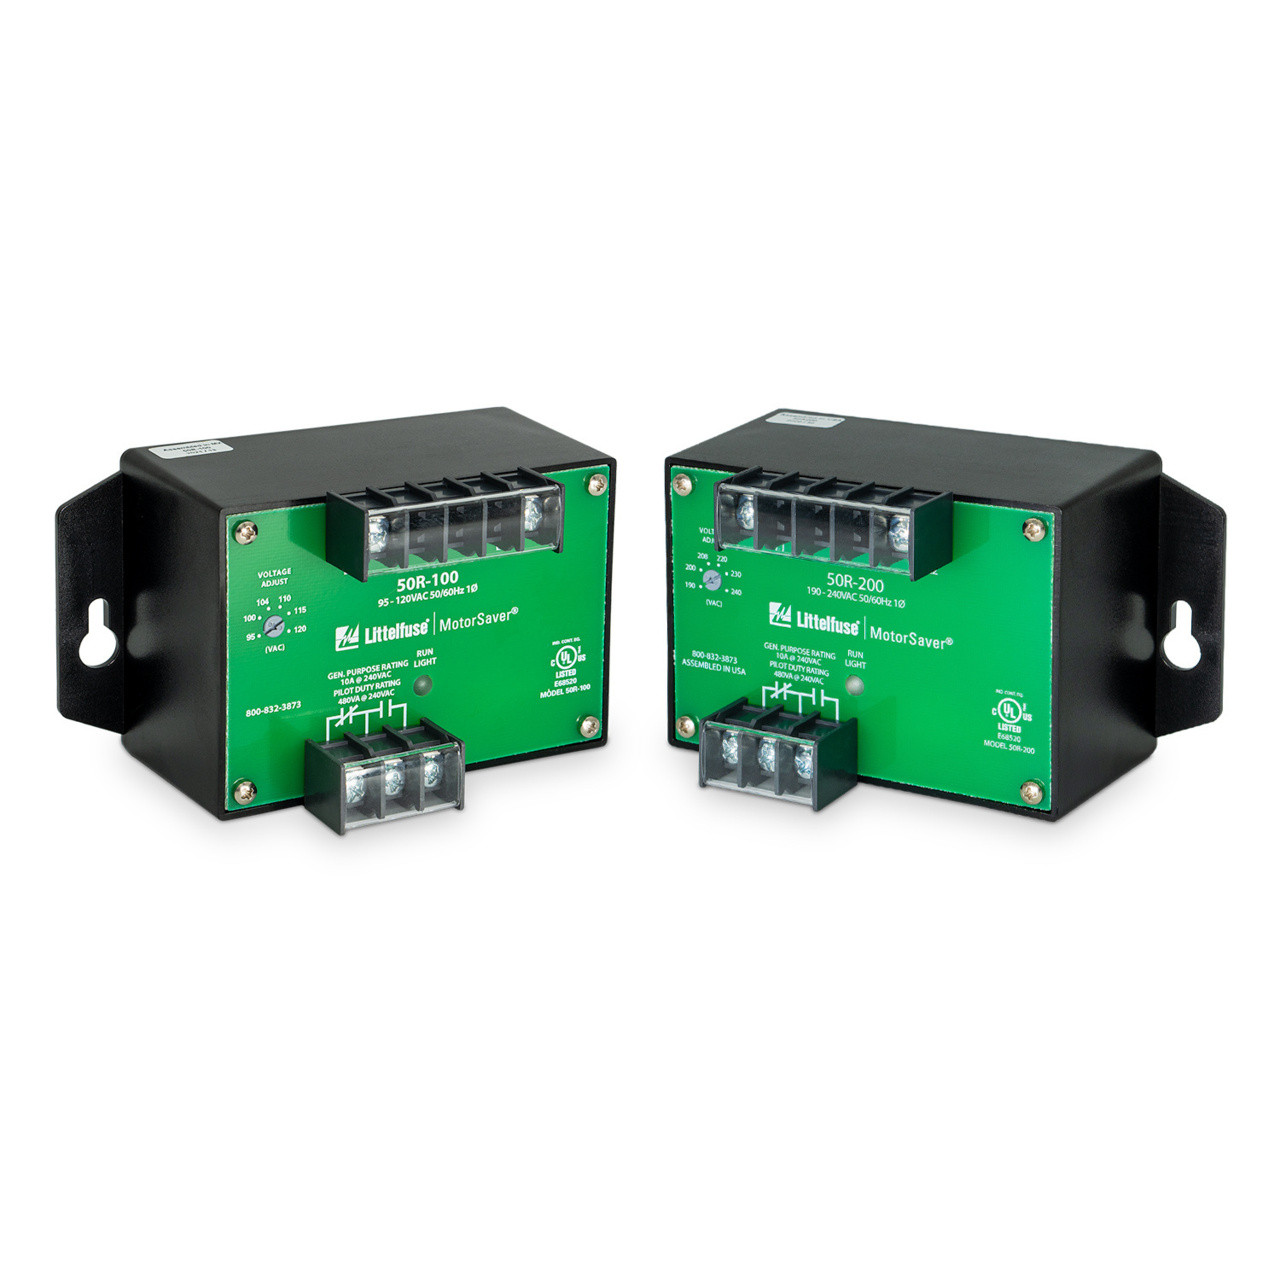 Littelfuse-Symcom 50R-100 Voltage Monitor Relays